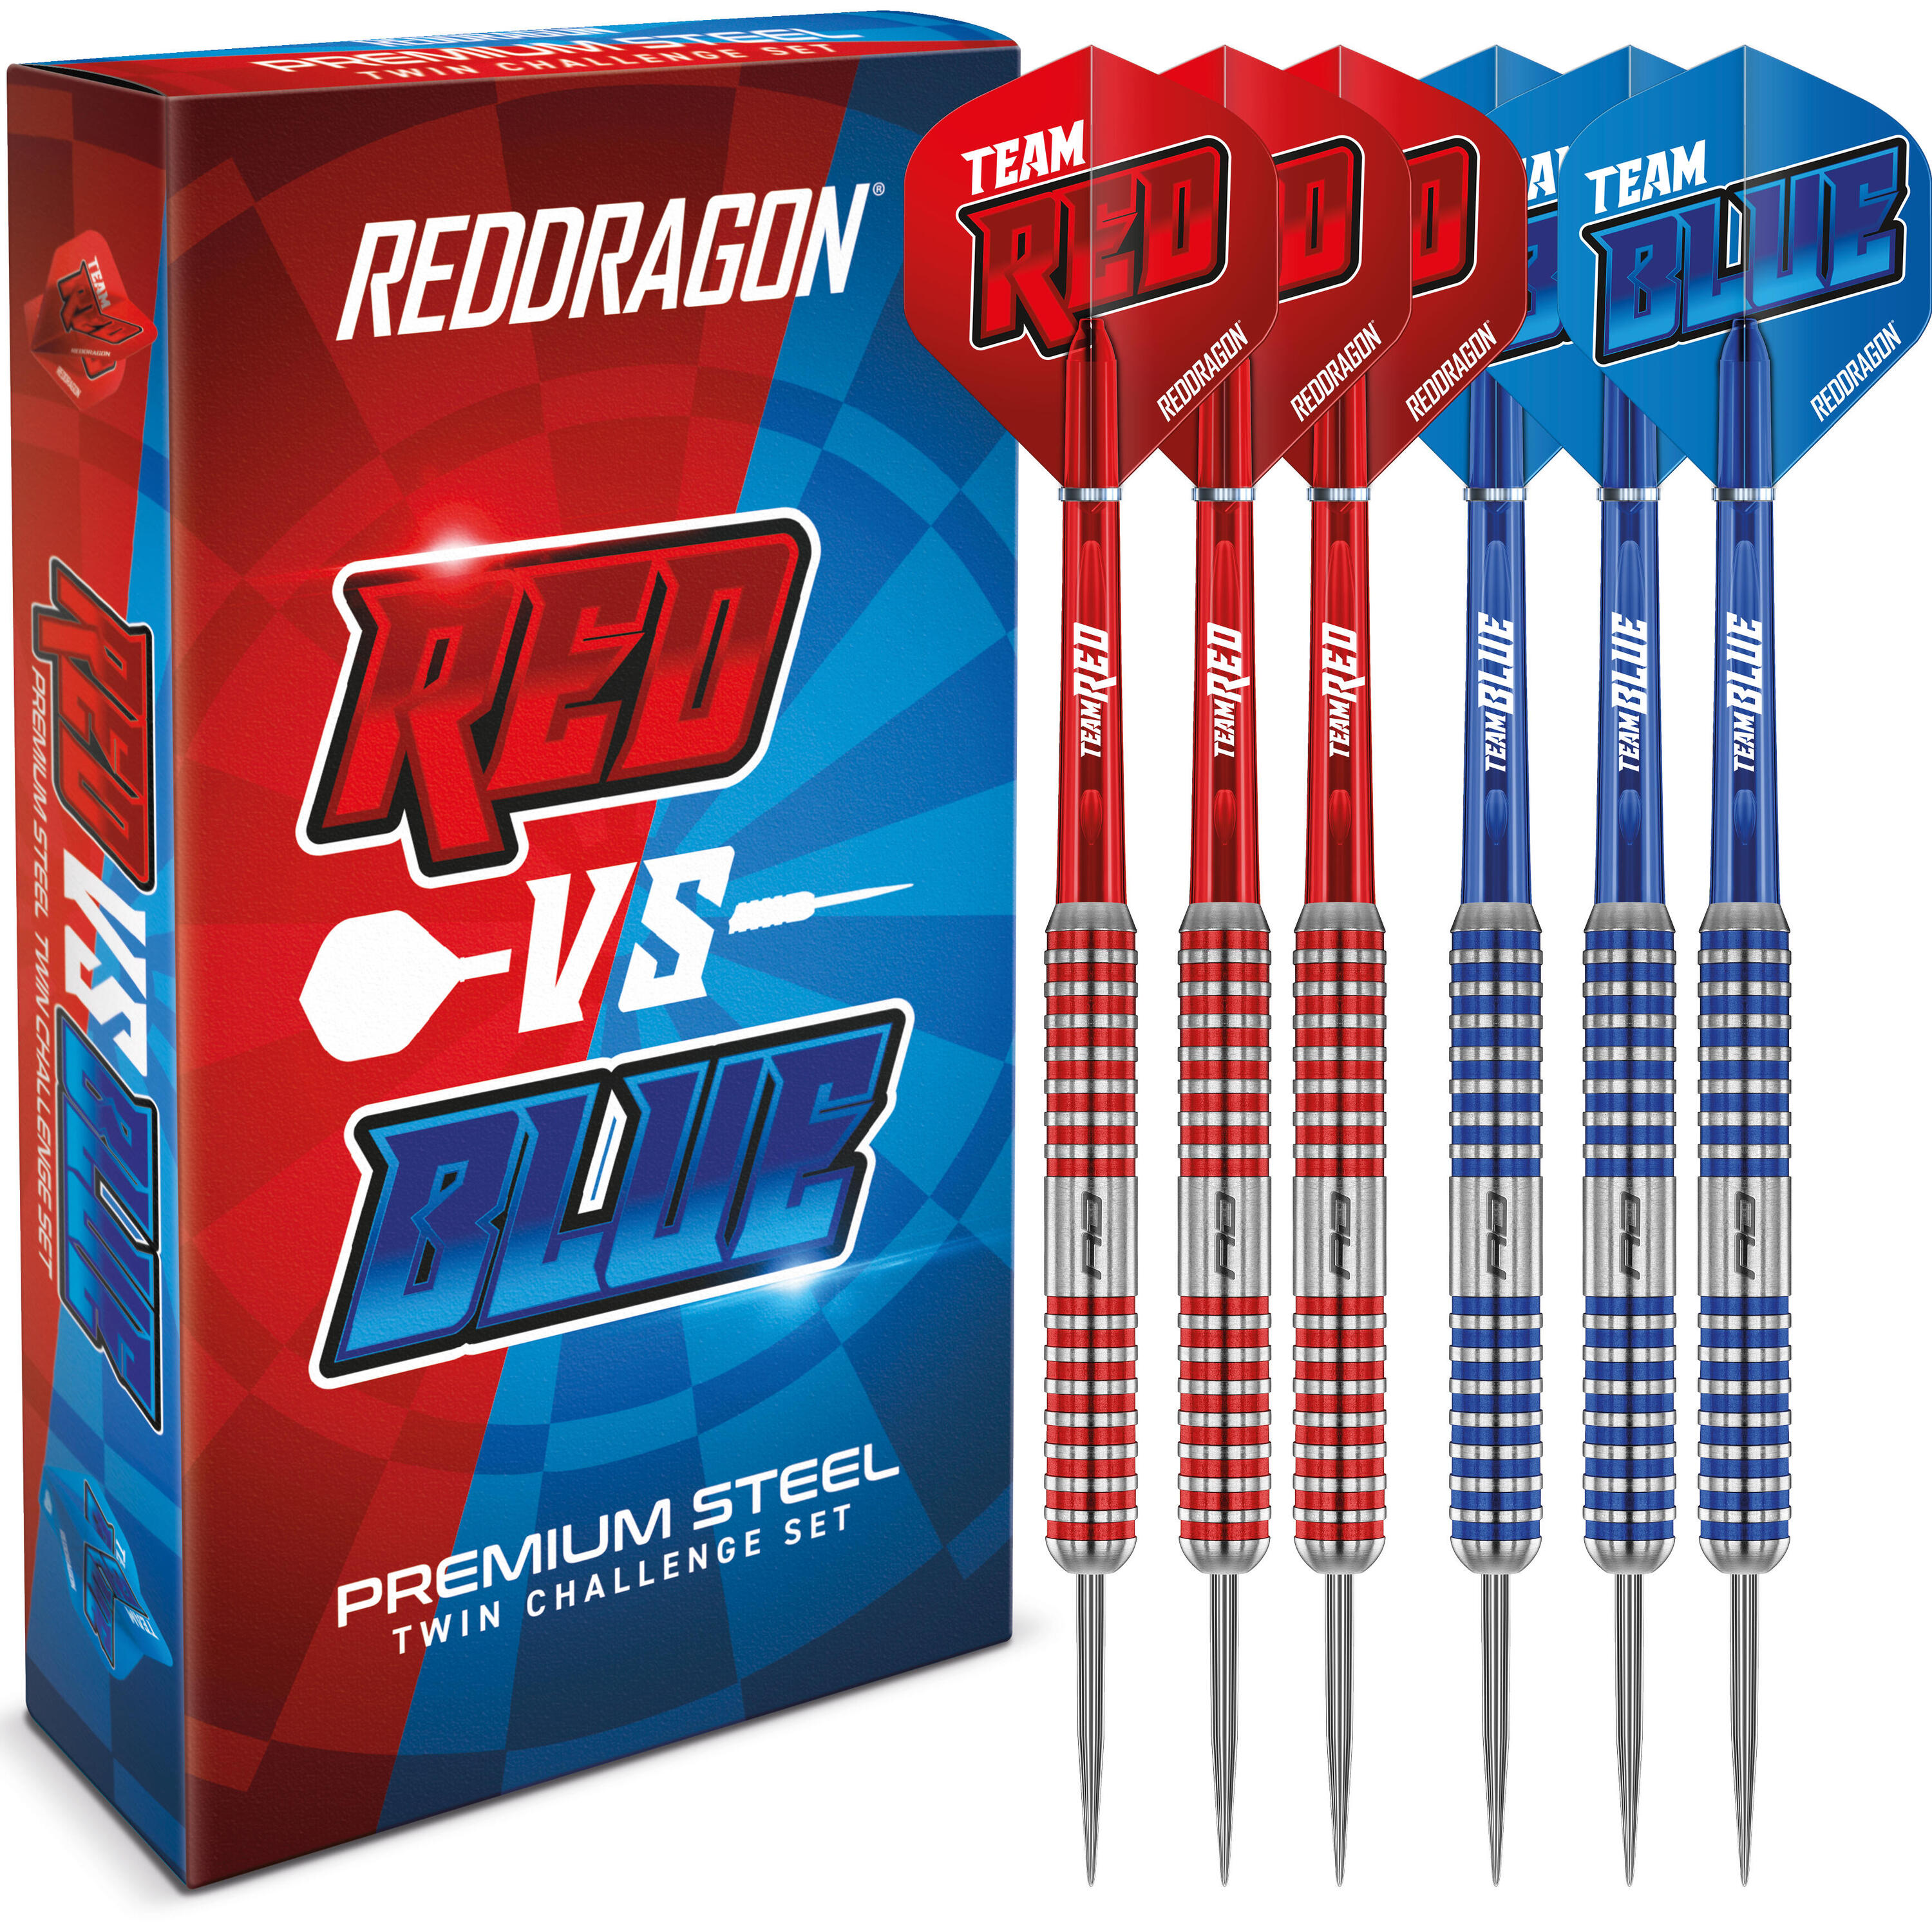 RED DRAGON DARTS Team Red v Team Blue Tungsten Professional Darts Set with Flights & Shafts